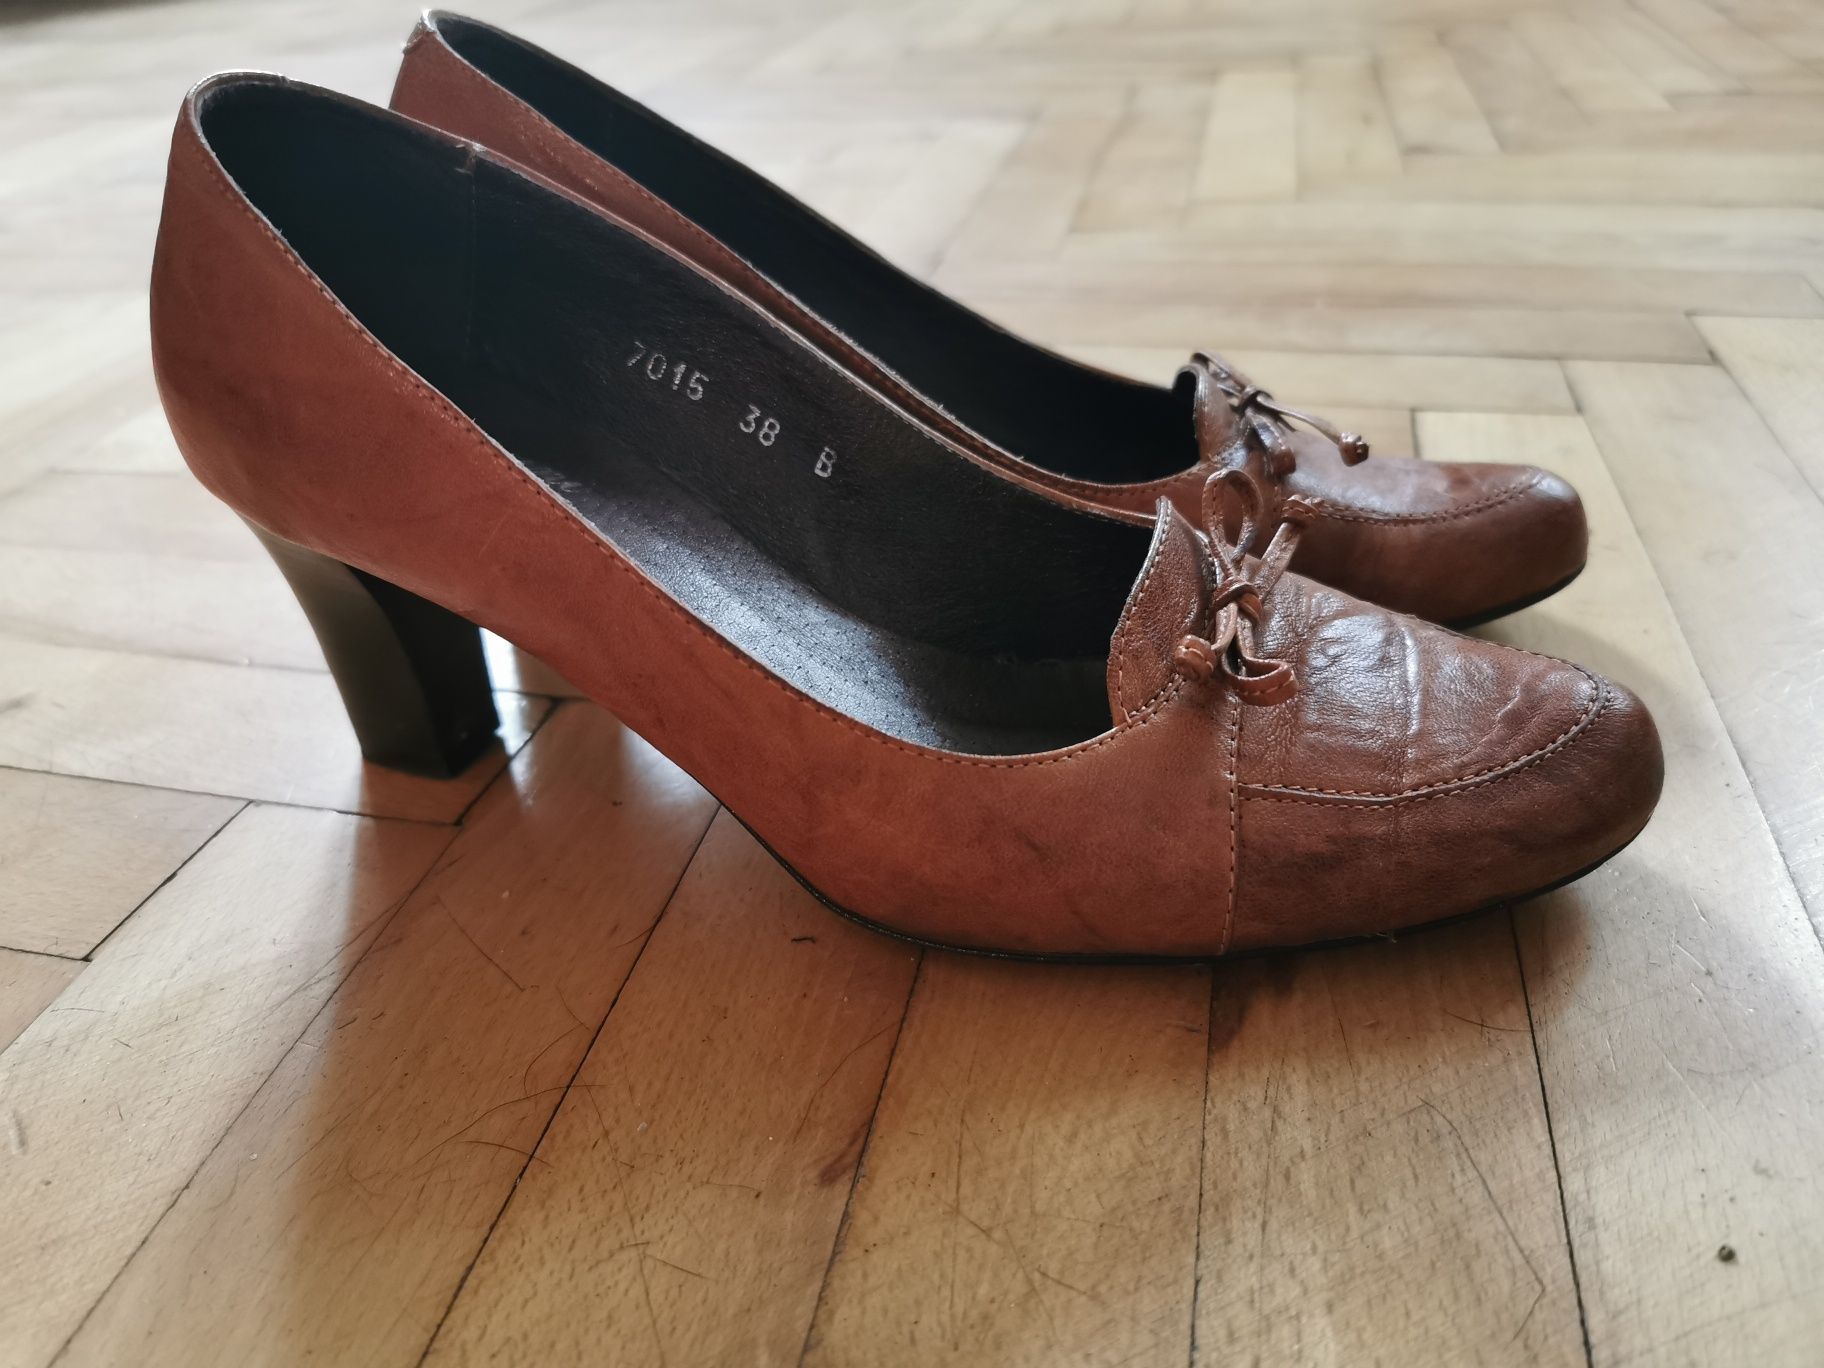 Buty włoskie półbuty pantofle Baldaccini r. 38 skóra rude